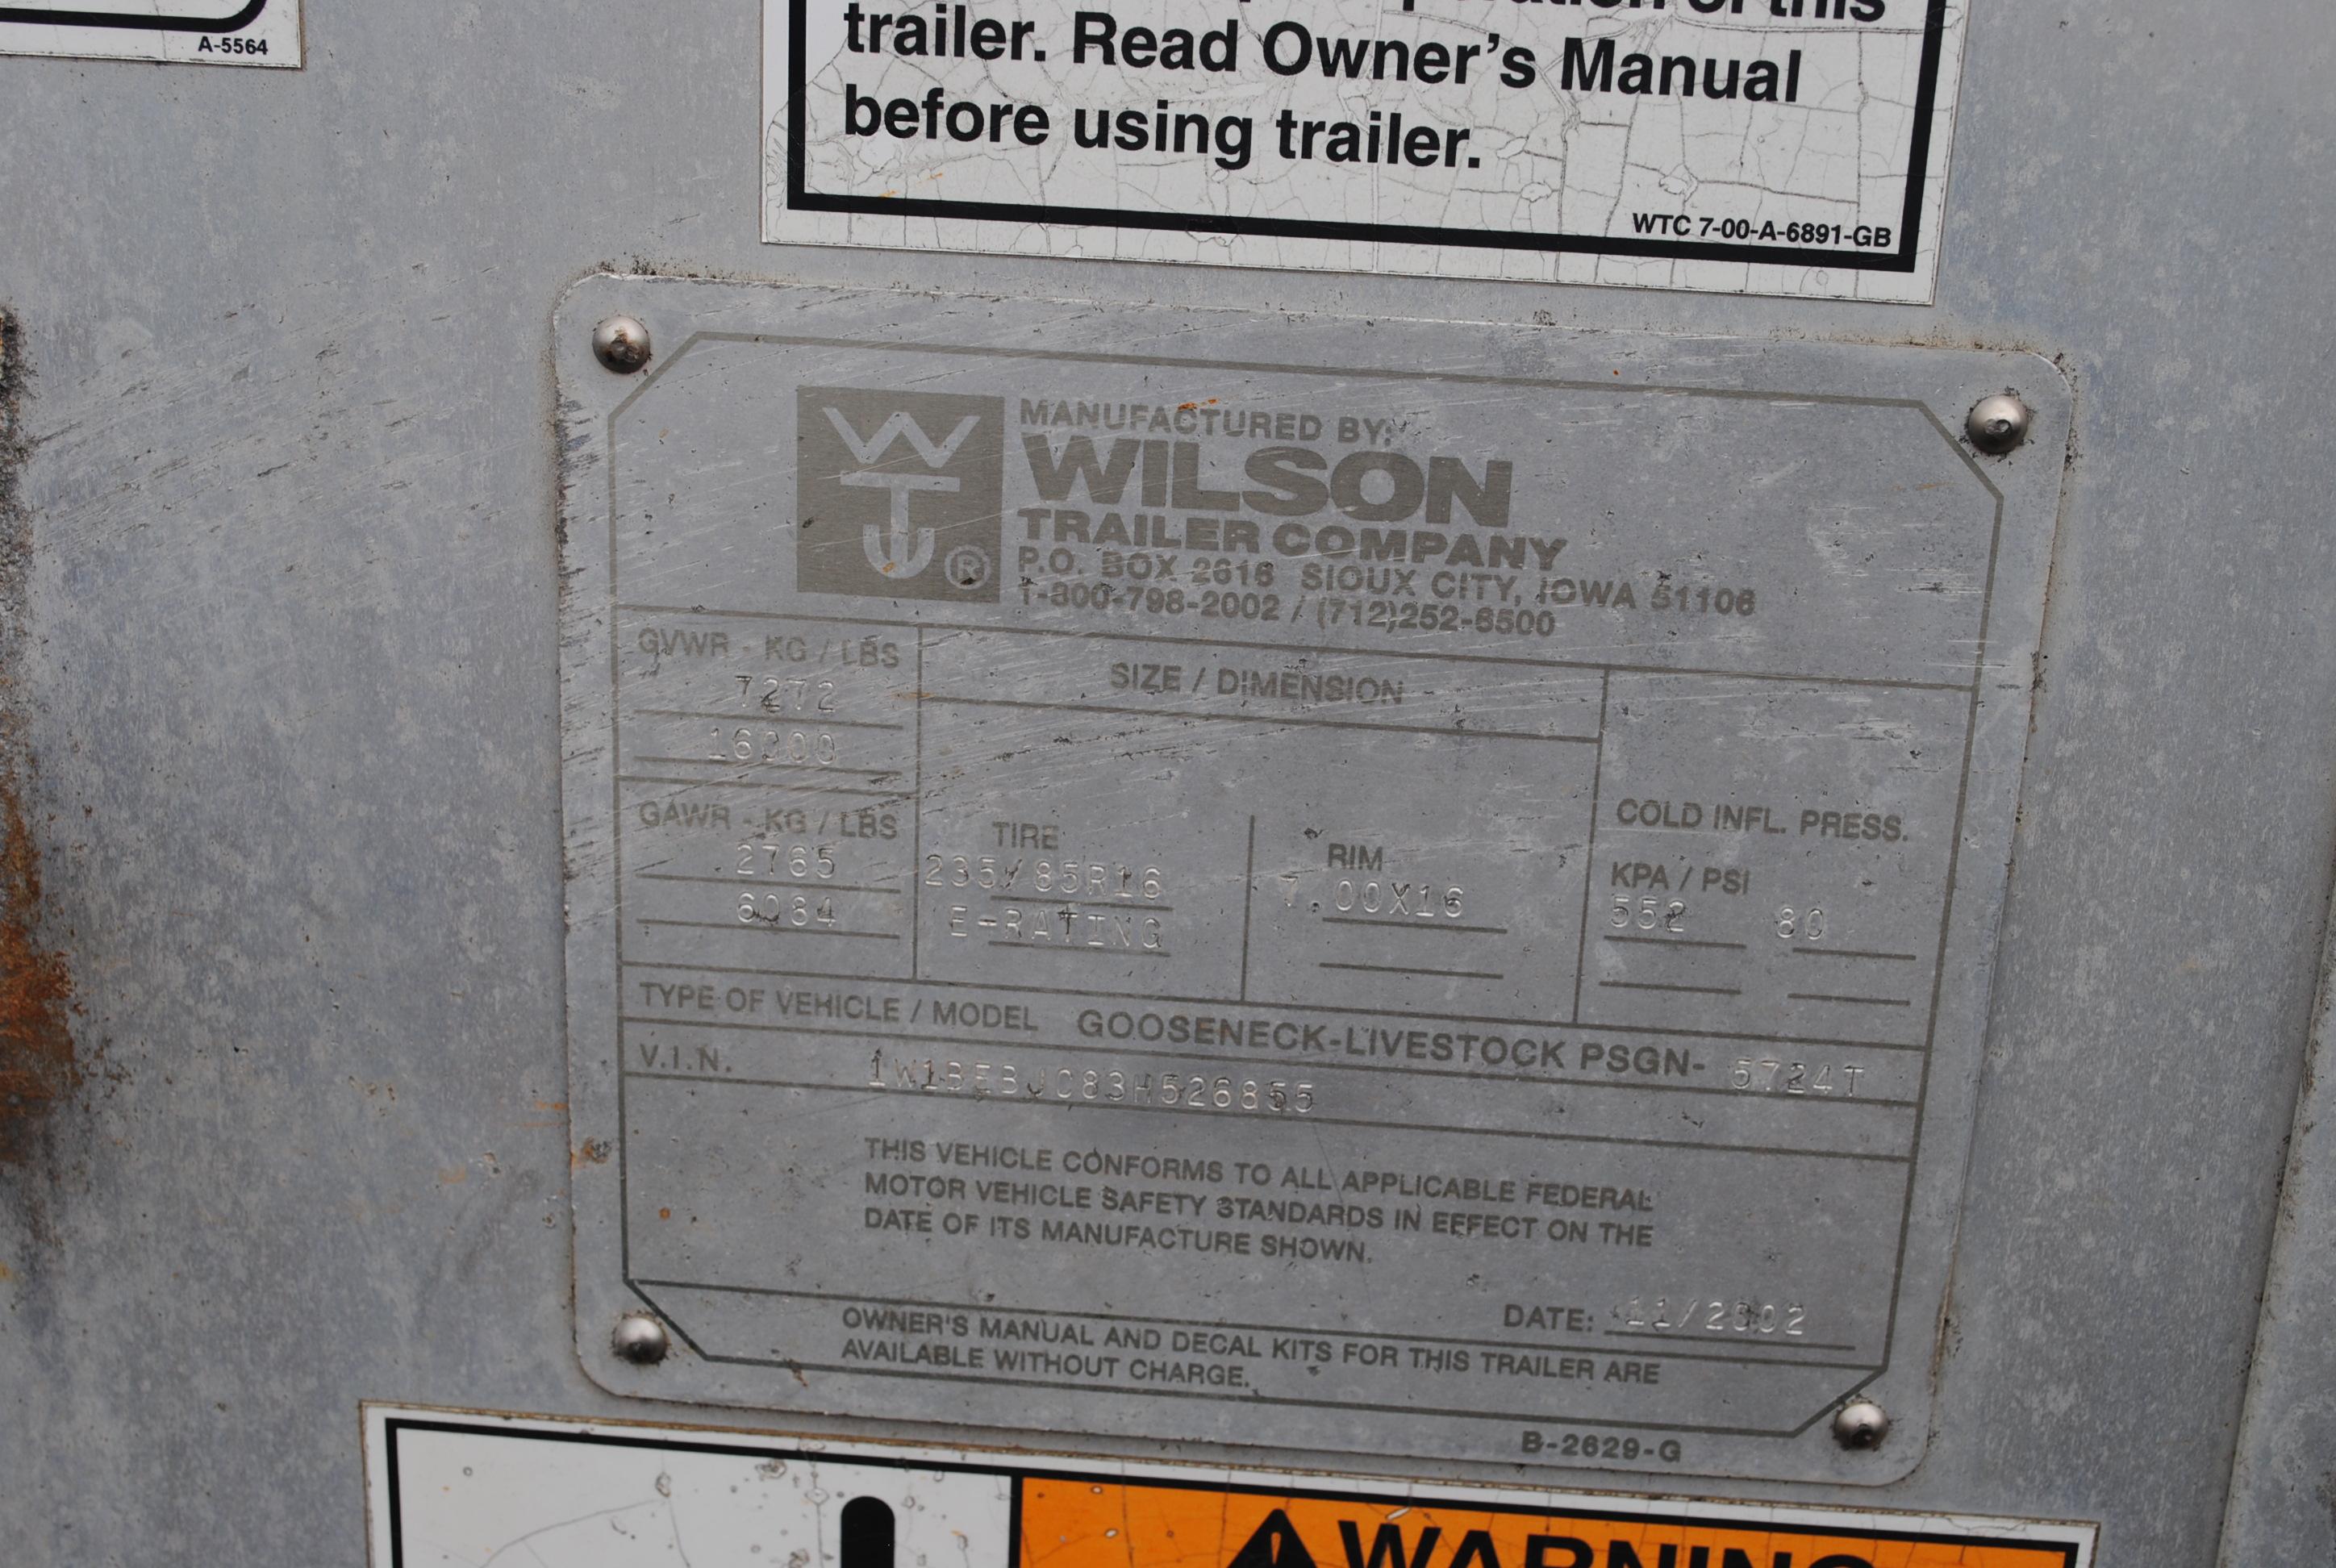 Wilson Super Star 24'x7' All Aluminum Gooseneck Livestock Trailer, 2 cut gates, slider on back door,